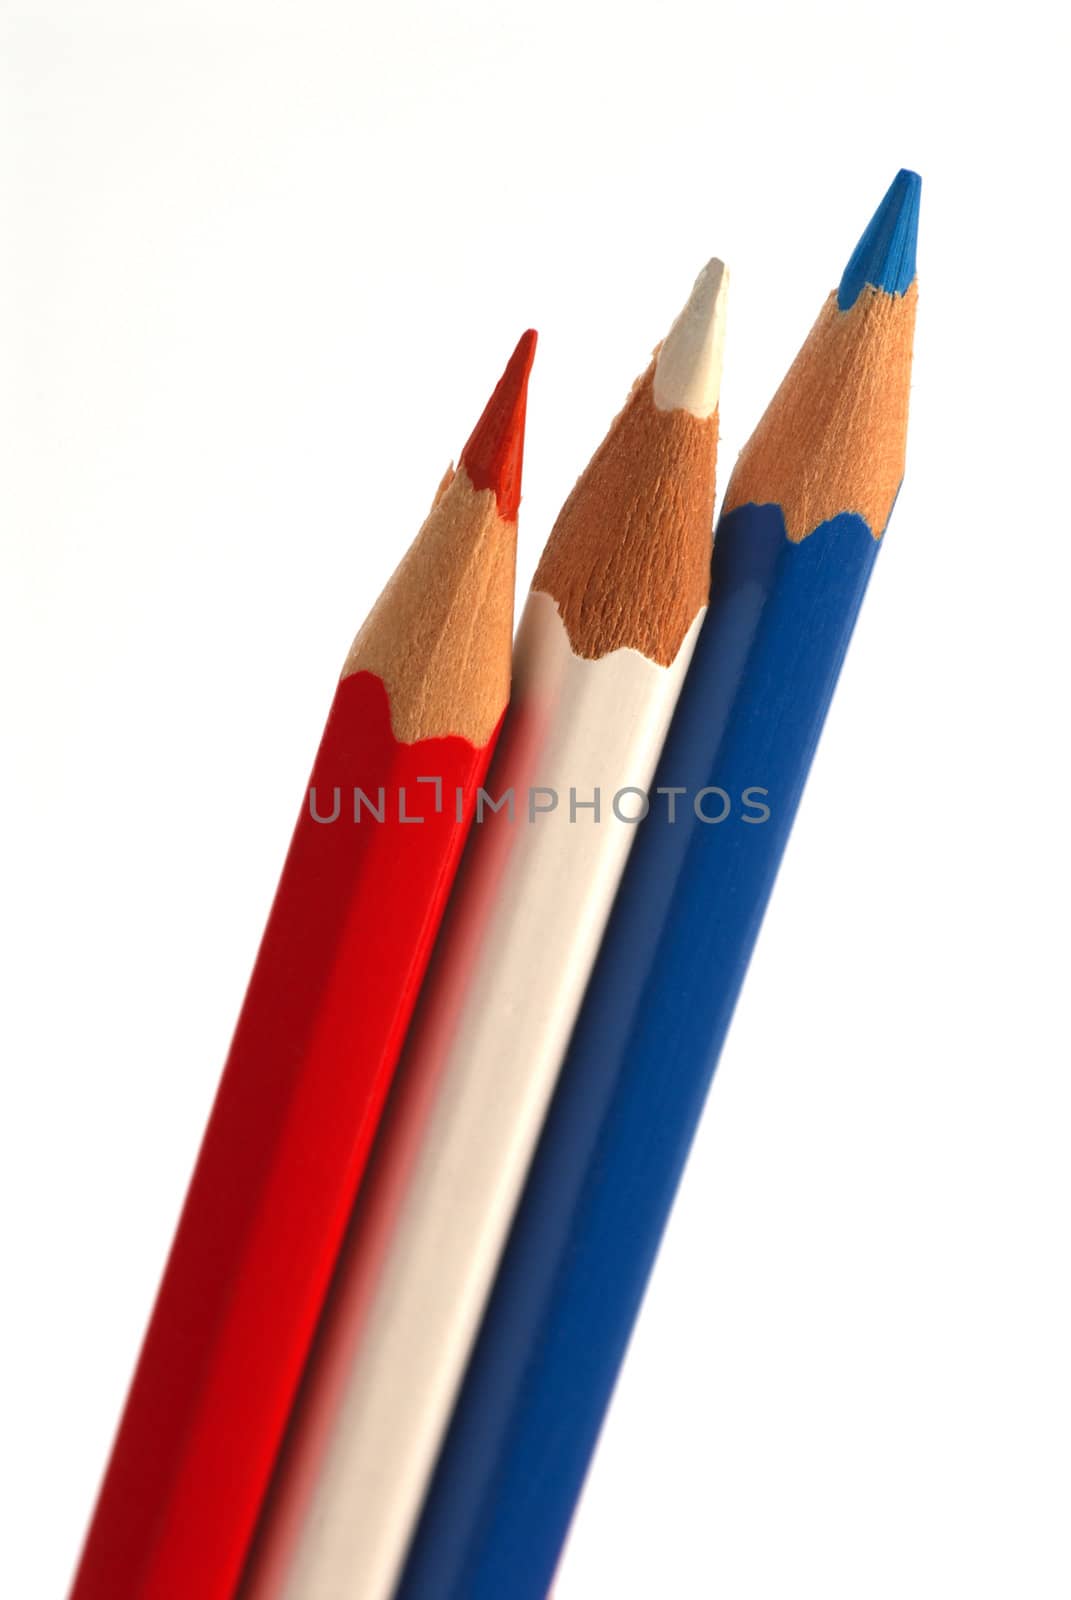 Three pencils by Kamensky